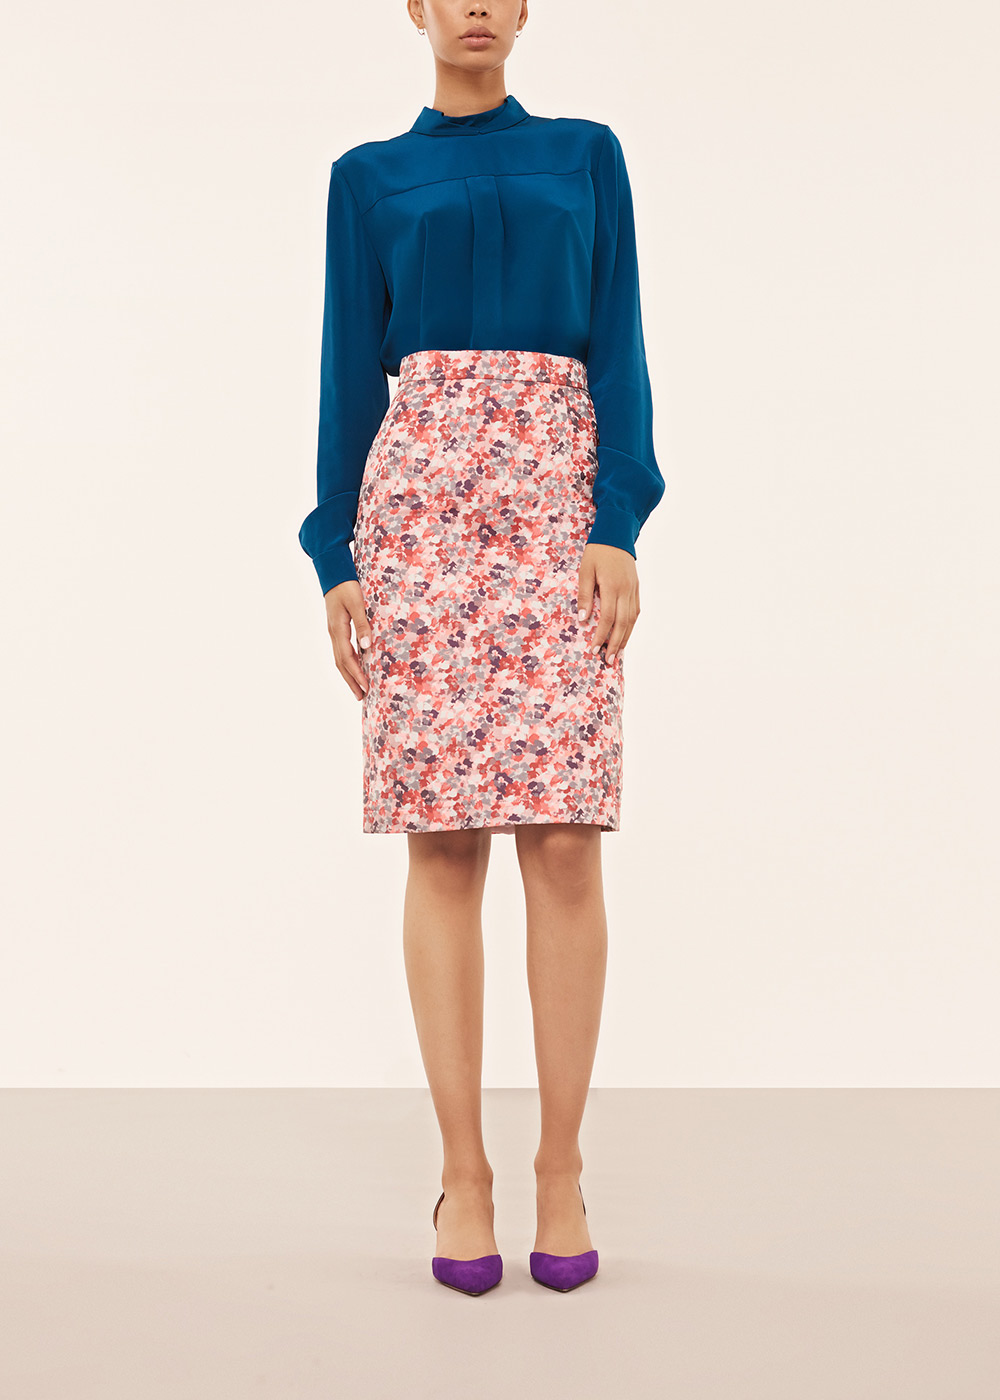 Floral Jacquard Woven Pencil Skirt - Alexander Lewis